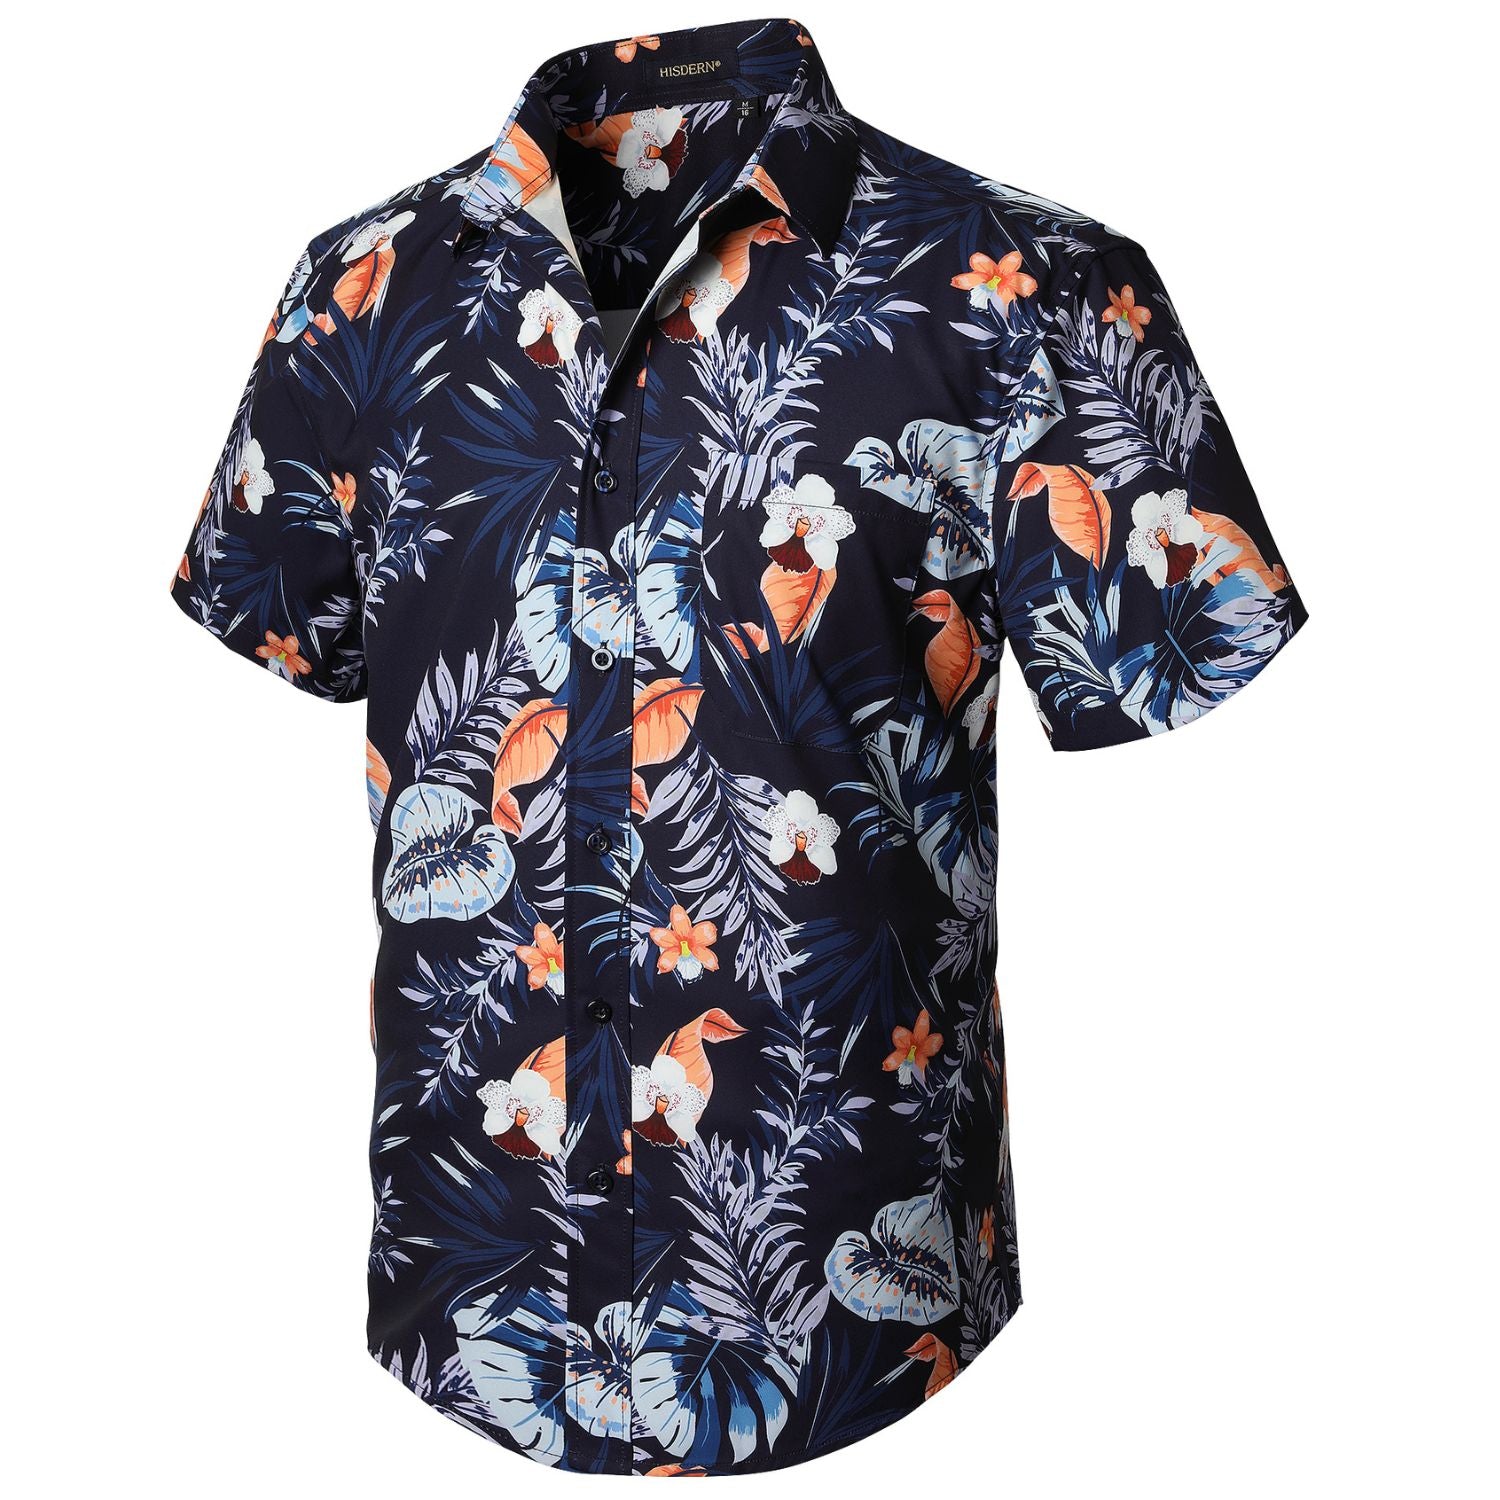 Hurley Short Sleeve Blue Hawaiian Floral Box Design Graphic T